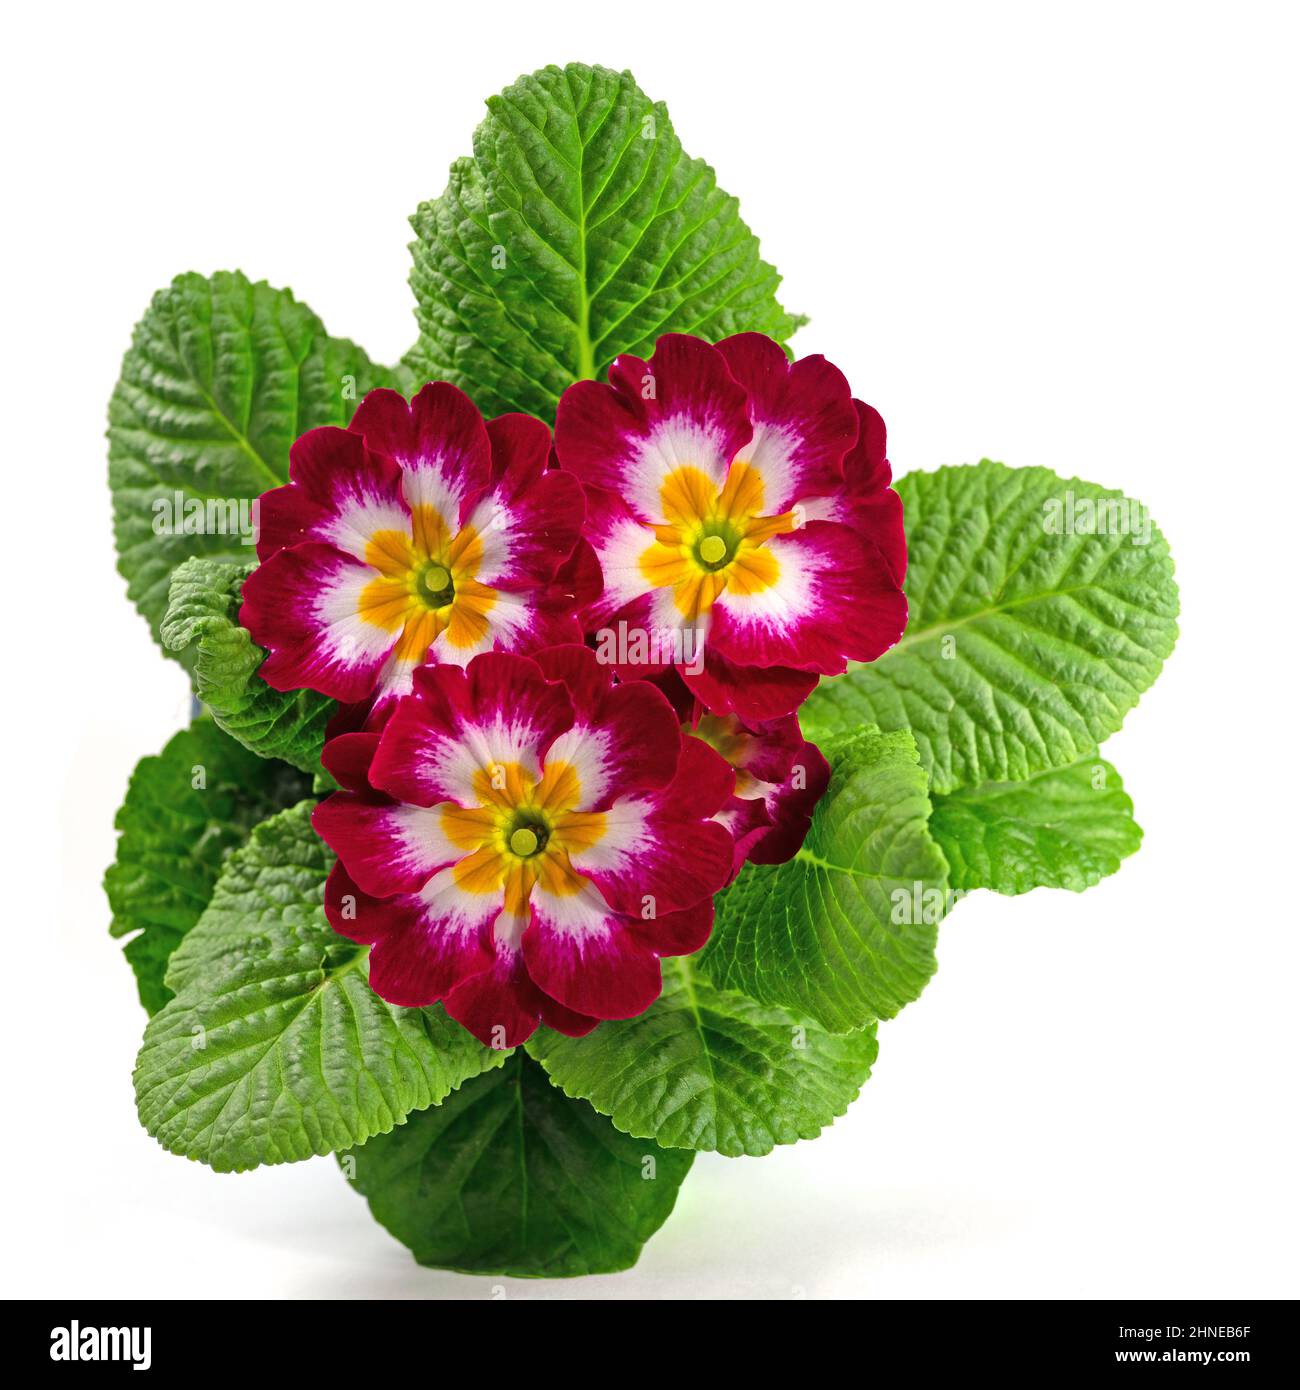 Flowering primrose against white background Stock Photo